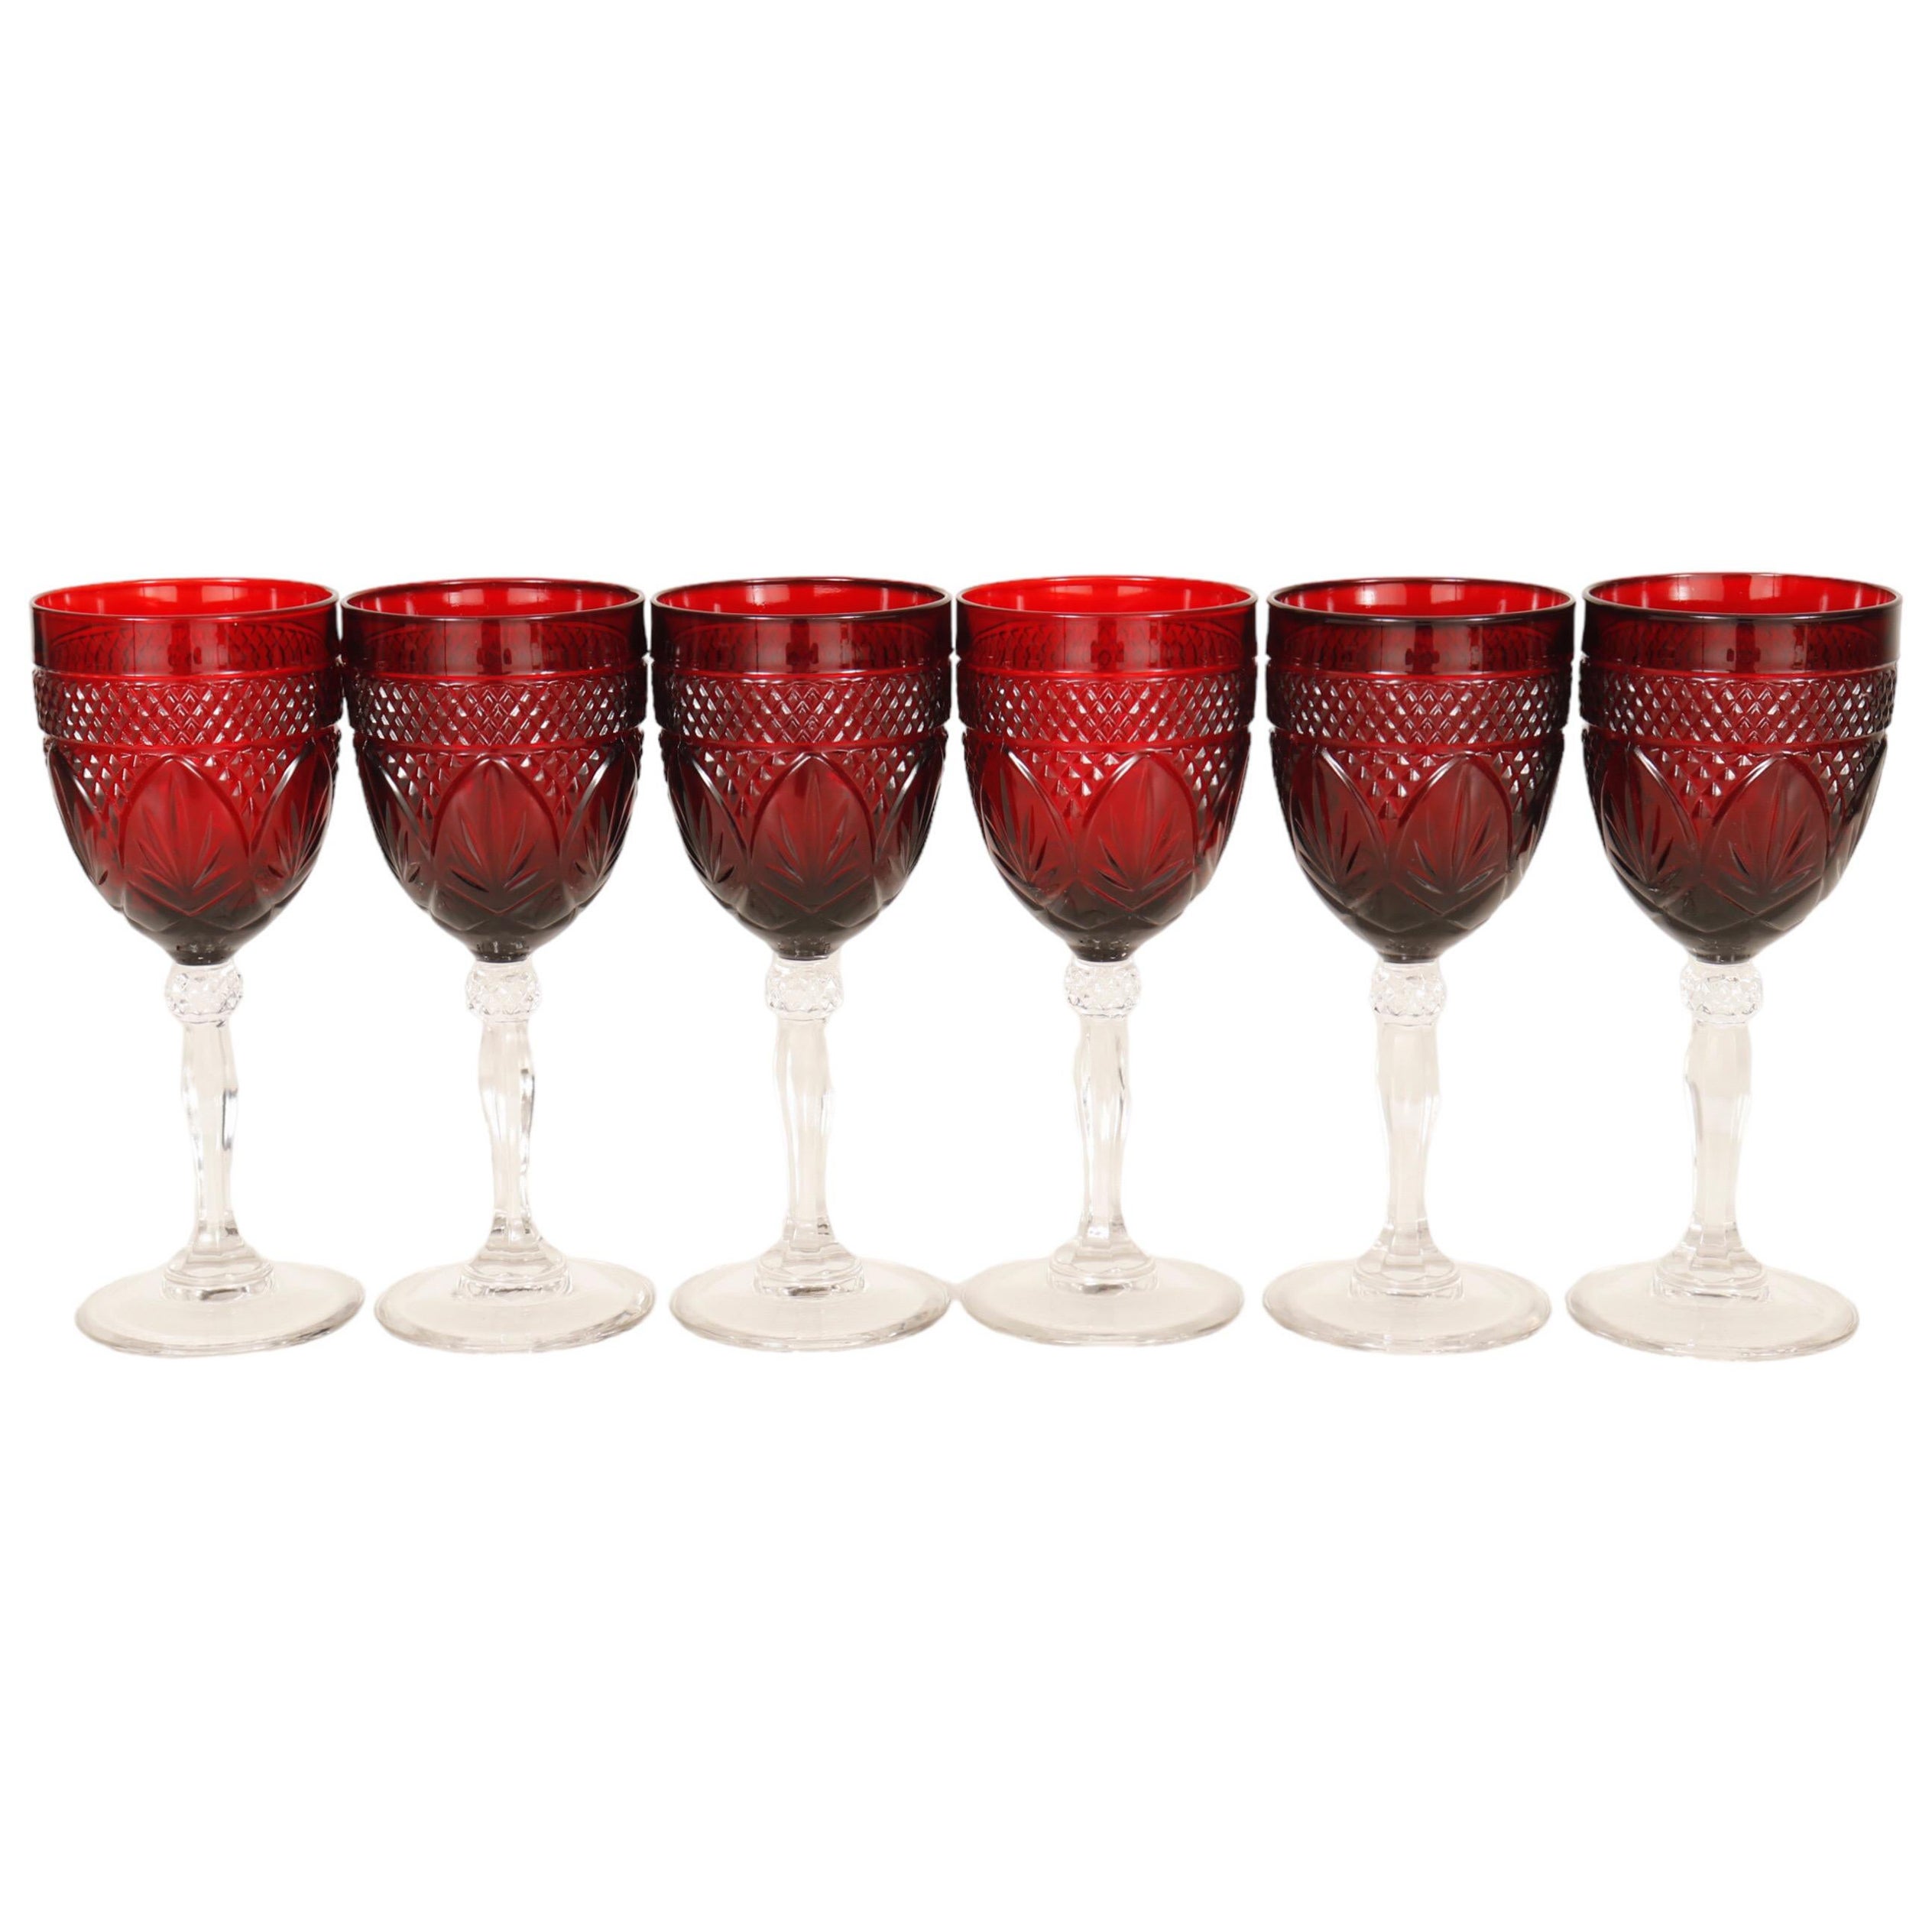 Verres à vin Cristal D'Arques rubis - Lot de 6